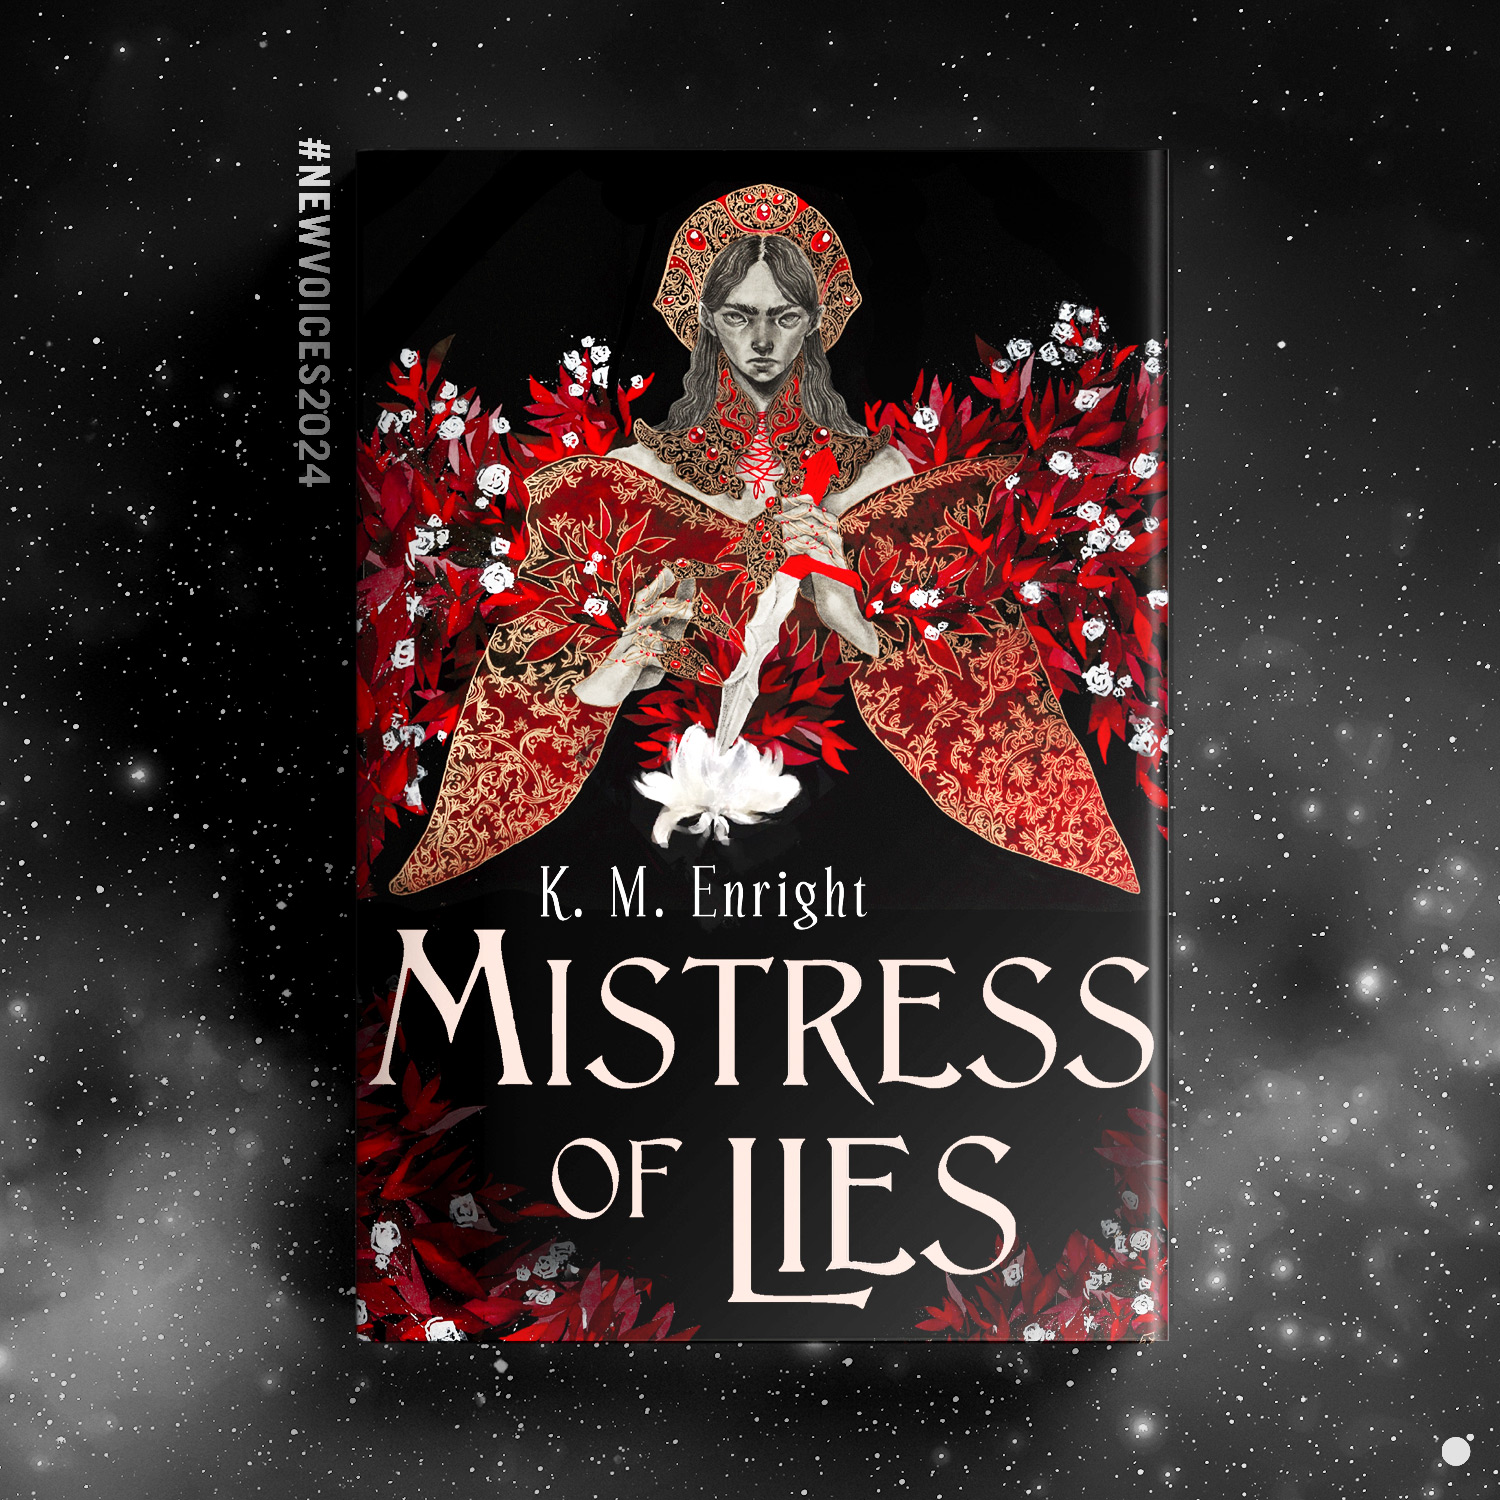 Mistress of Lies by K. M. Enright